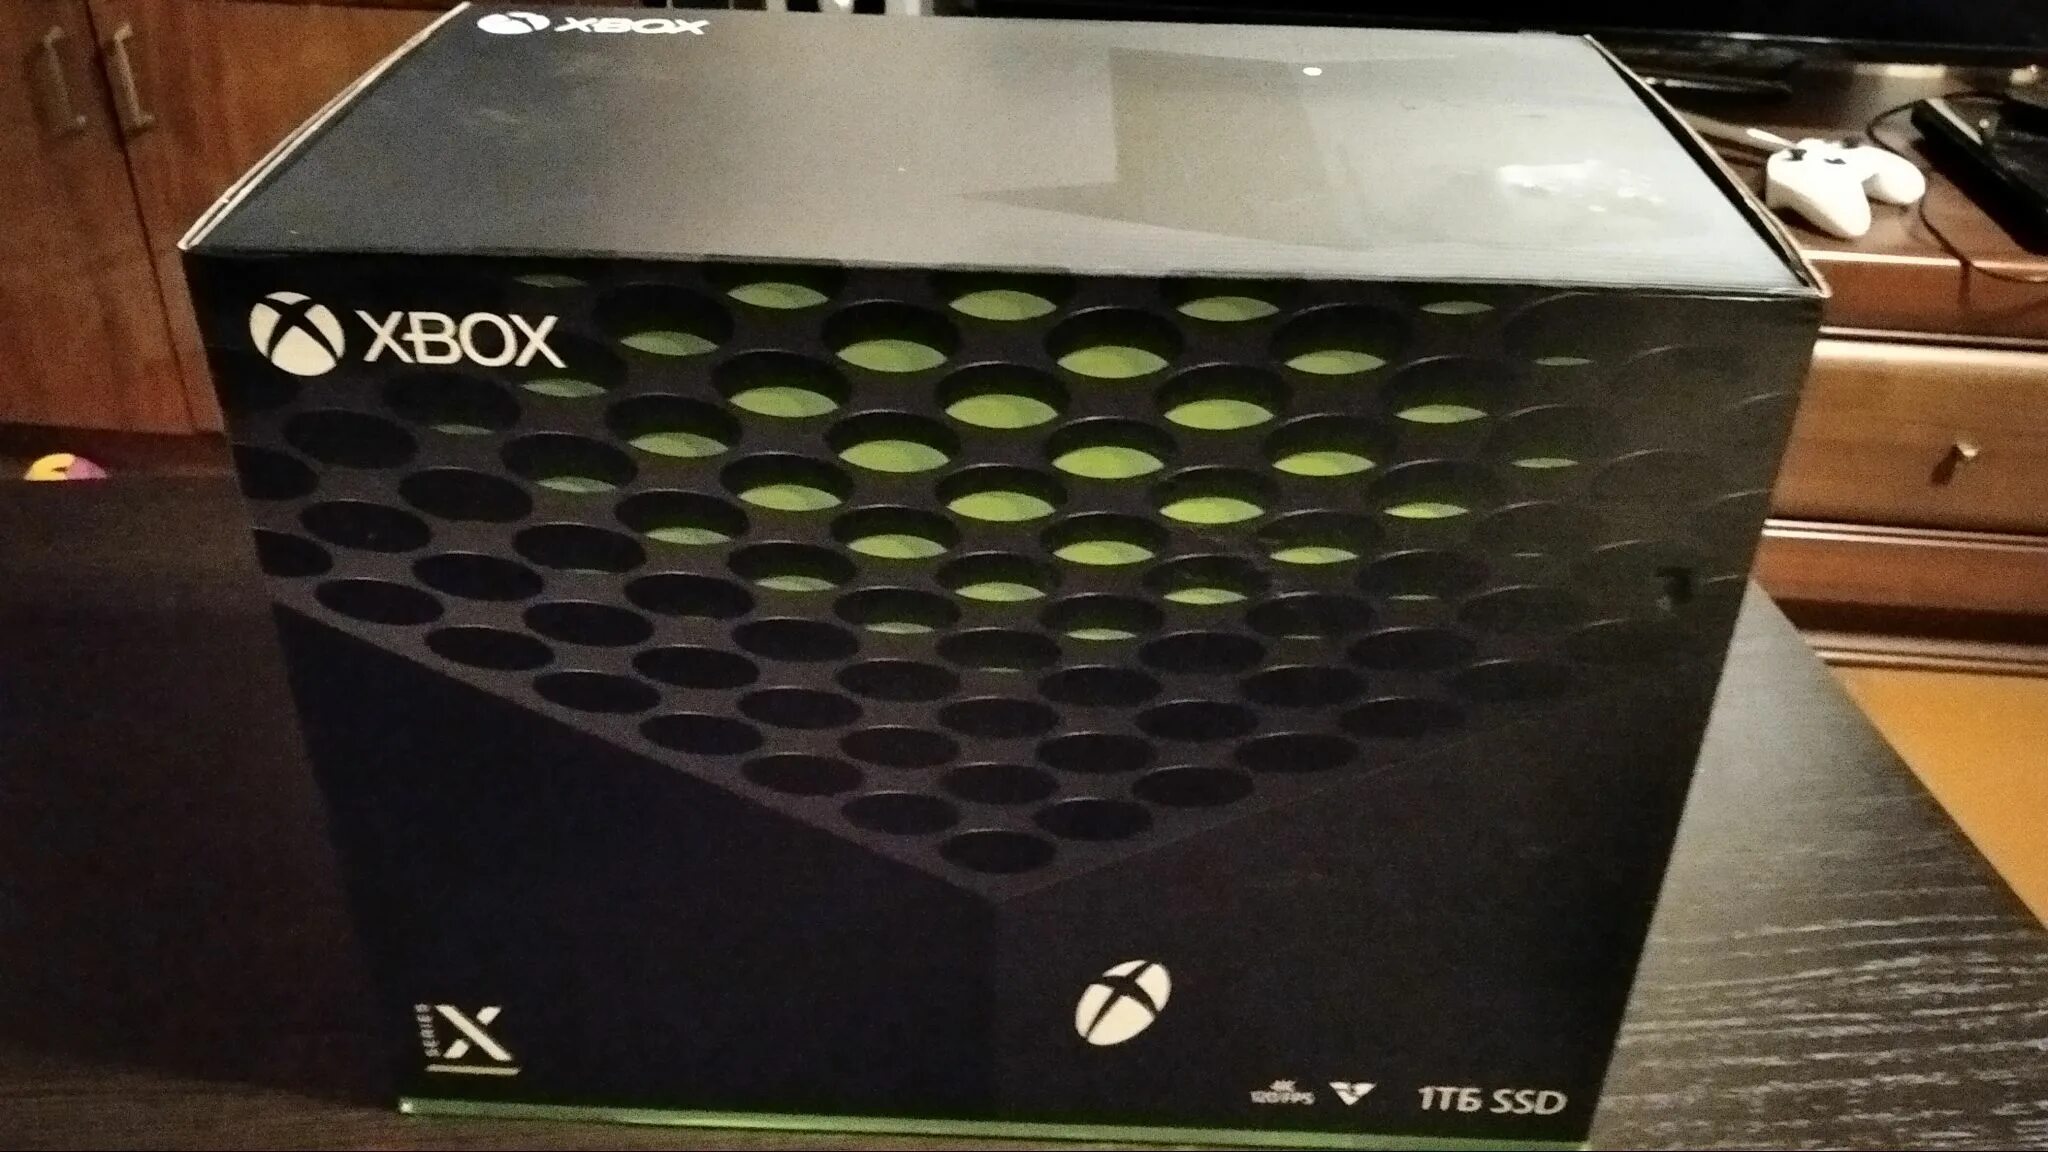 Xbox series ростест. Xbox Series x 1tb. Xbox Microsoft Xbox Series x 1tb. Игровая консоль приставка Xbox Series x 1tb SSD. Игровая приставка Microsoft Xbox Series x 1000 ГБ SSD, черный.